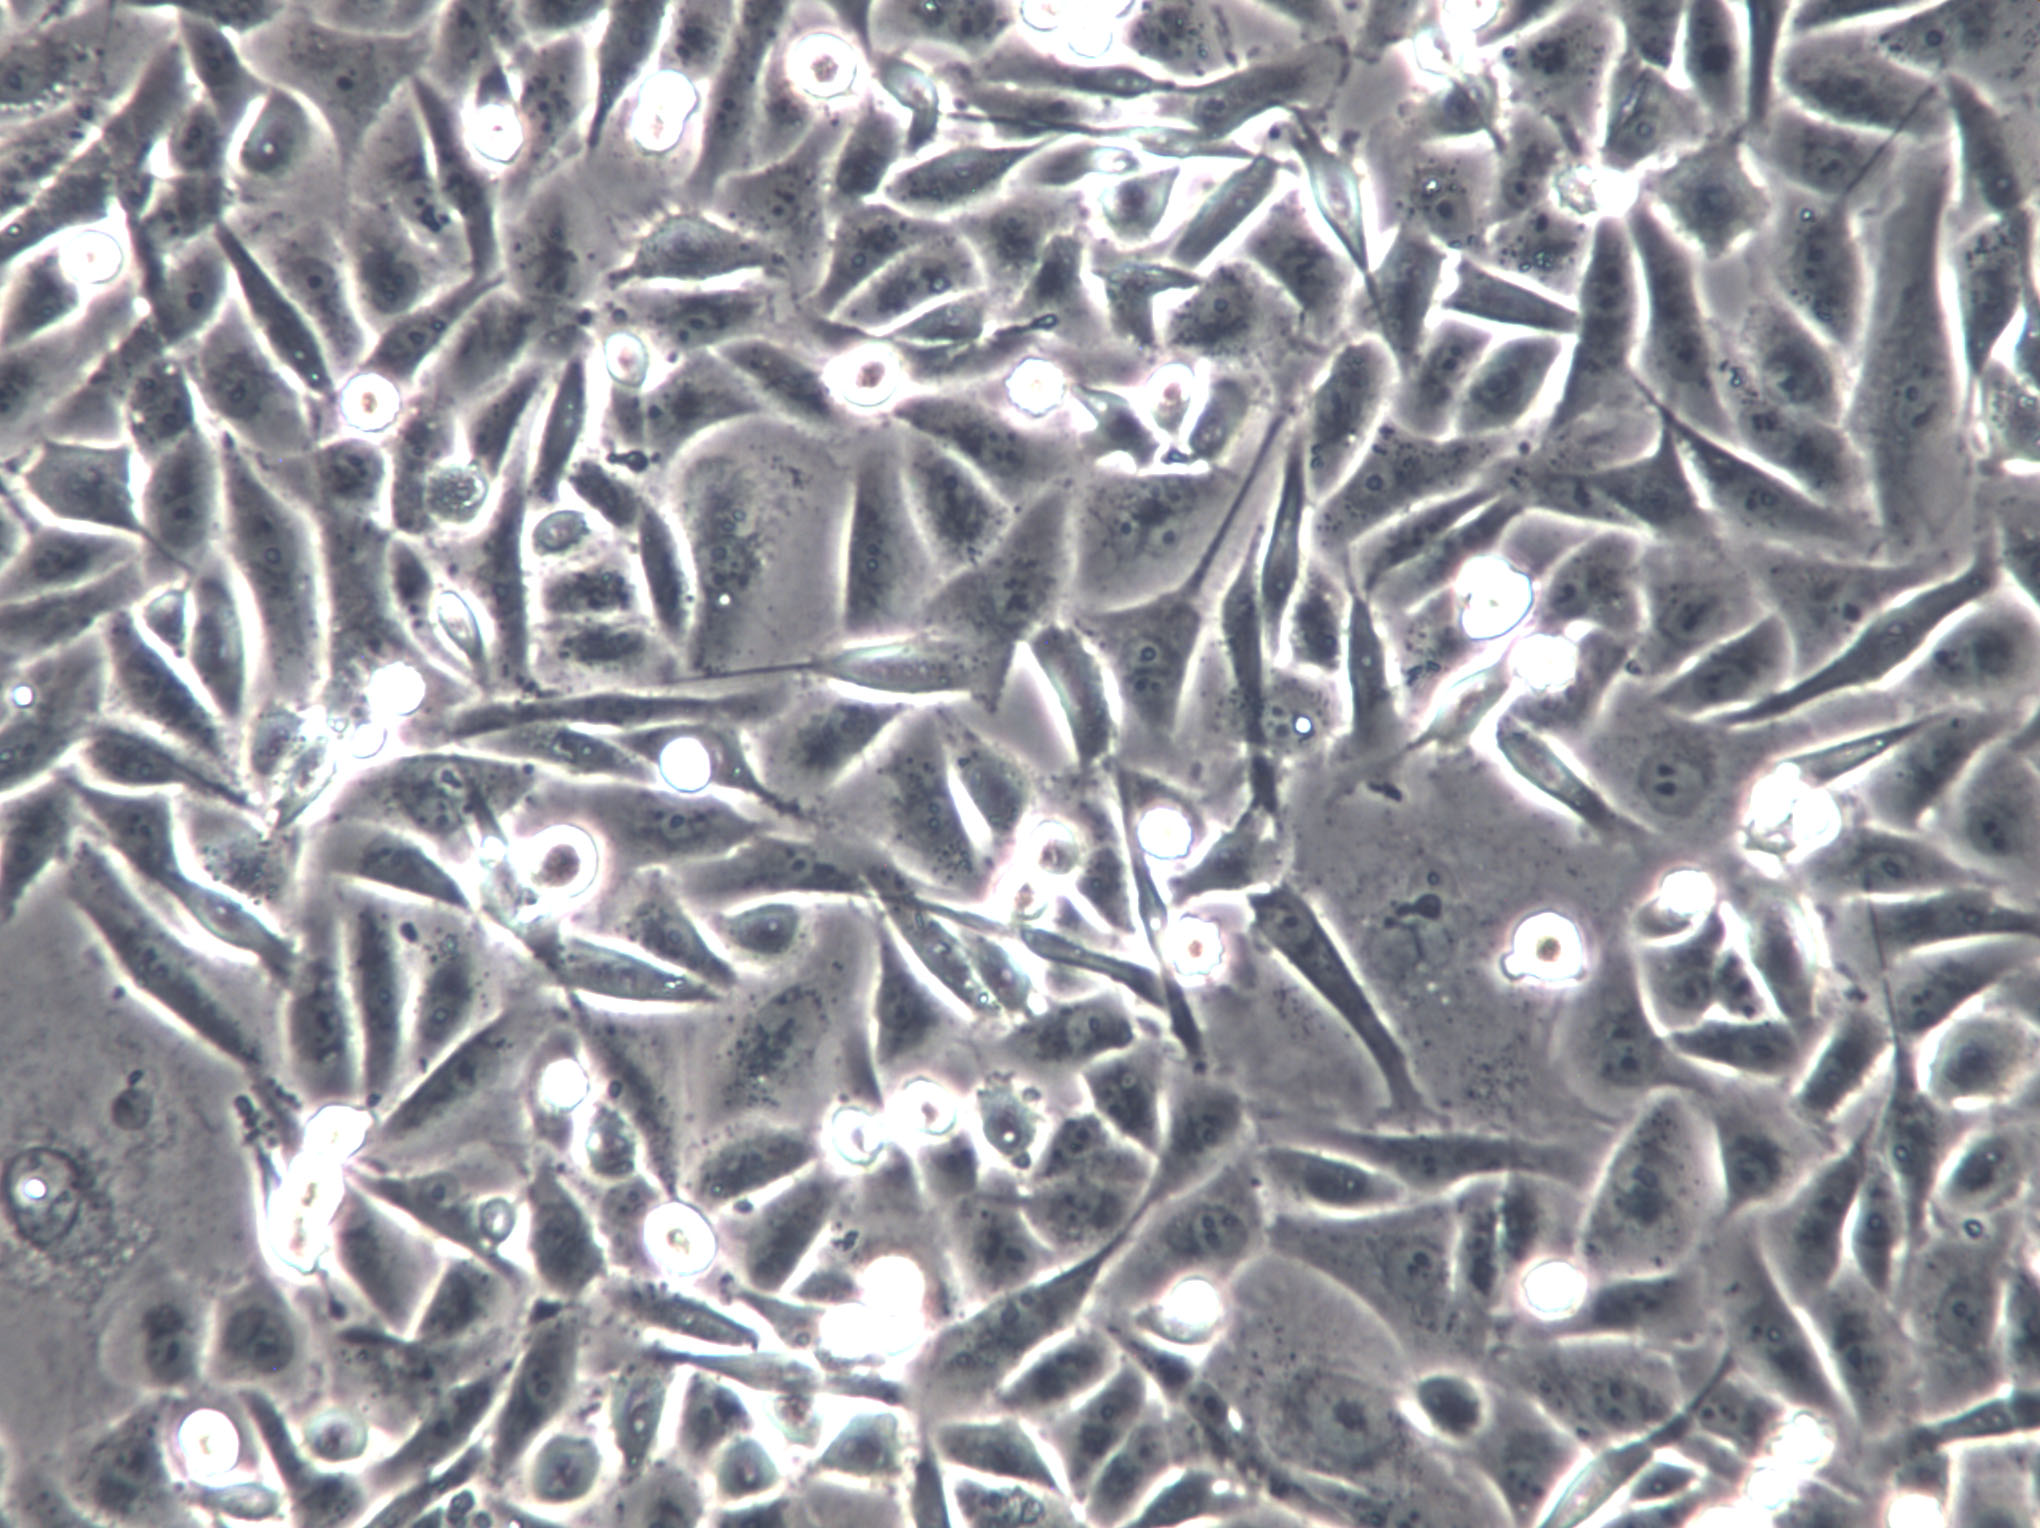 CPA 47 Cells(赠送Str鉴定报告)|牛肺血管内皮细胞,CPA 47 Cells